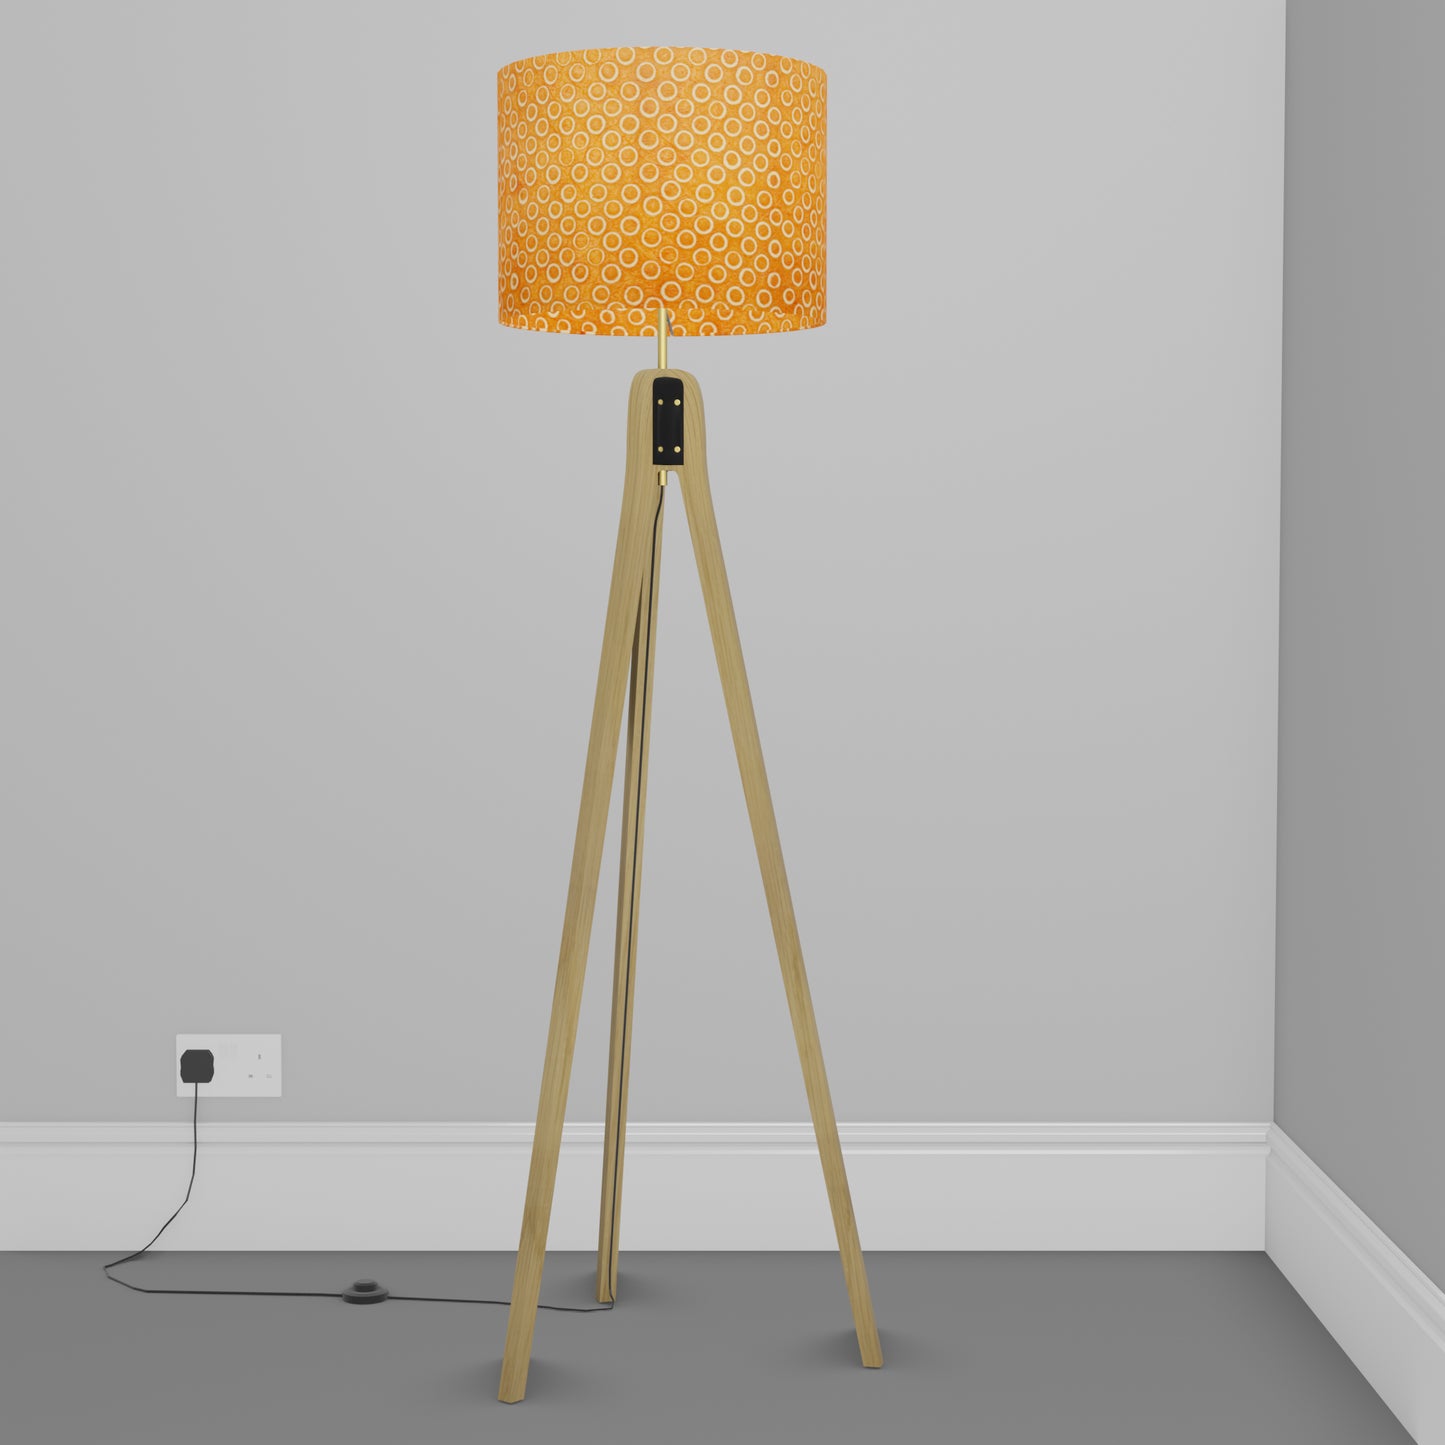 Oak Tripod Floor Lamp - P03 - Batik Orange Circles